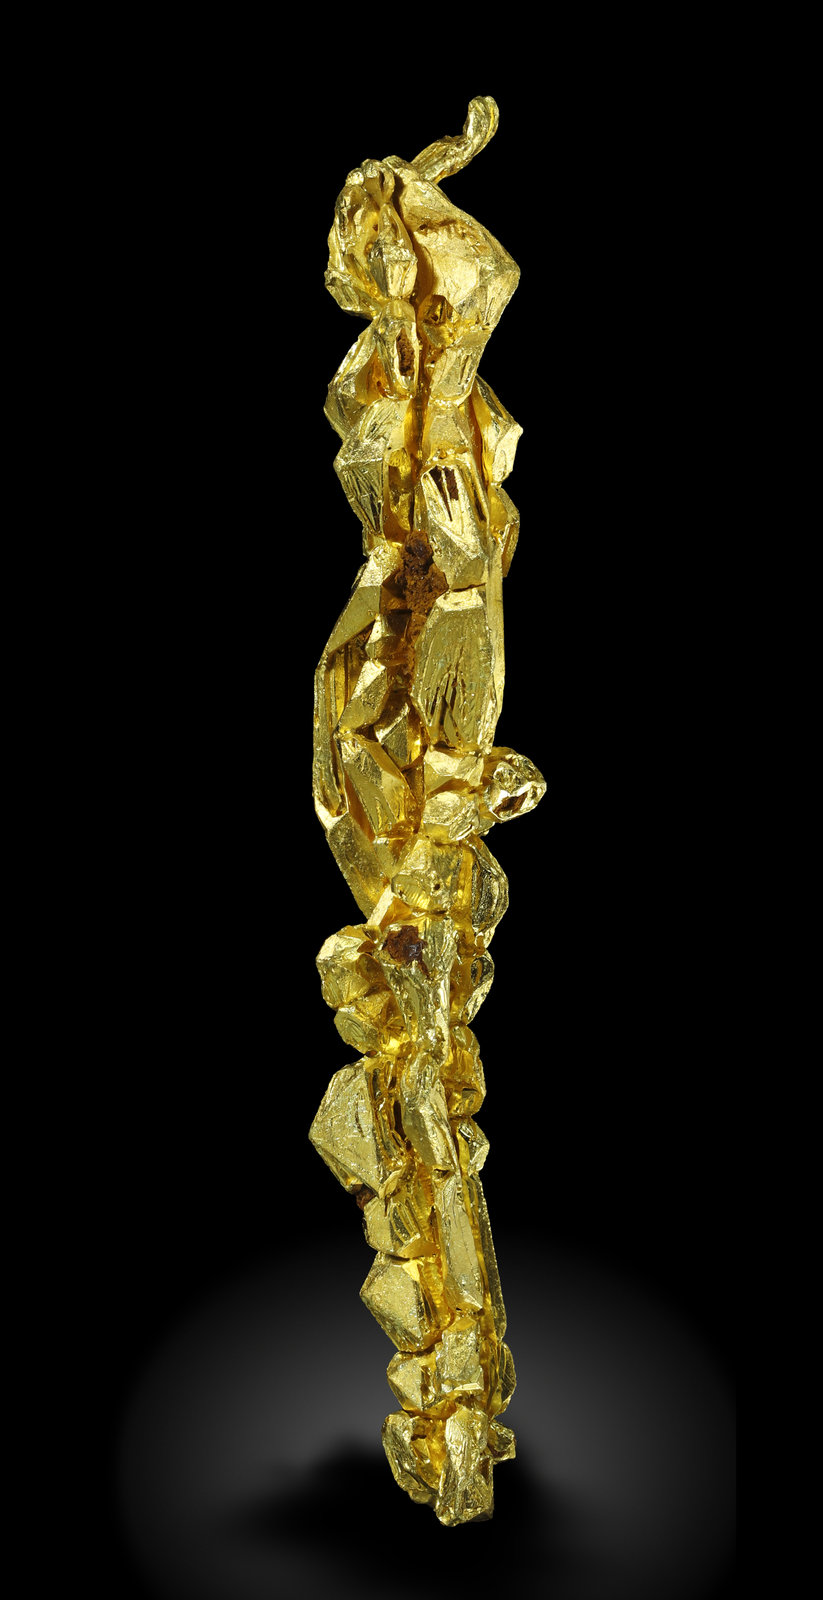 specimens/s_imagesAM5/Gold-MK36AM5_0661_f.jpg